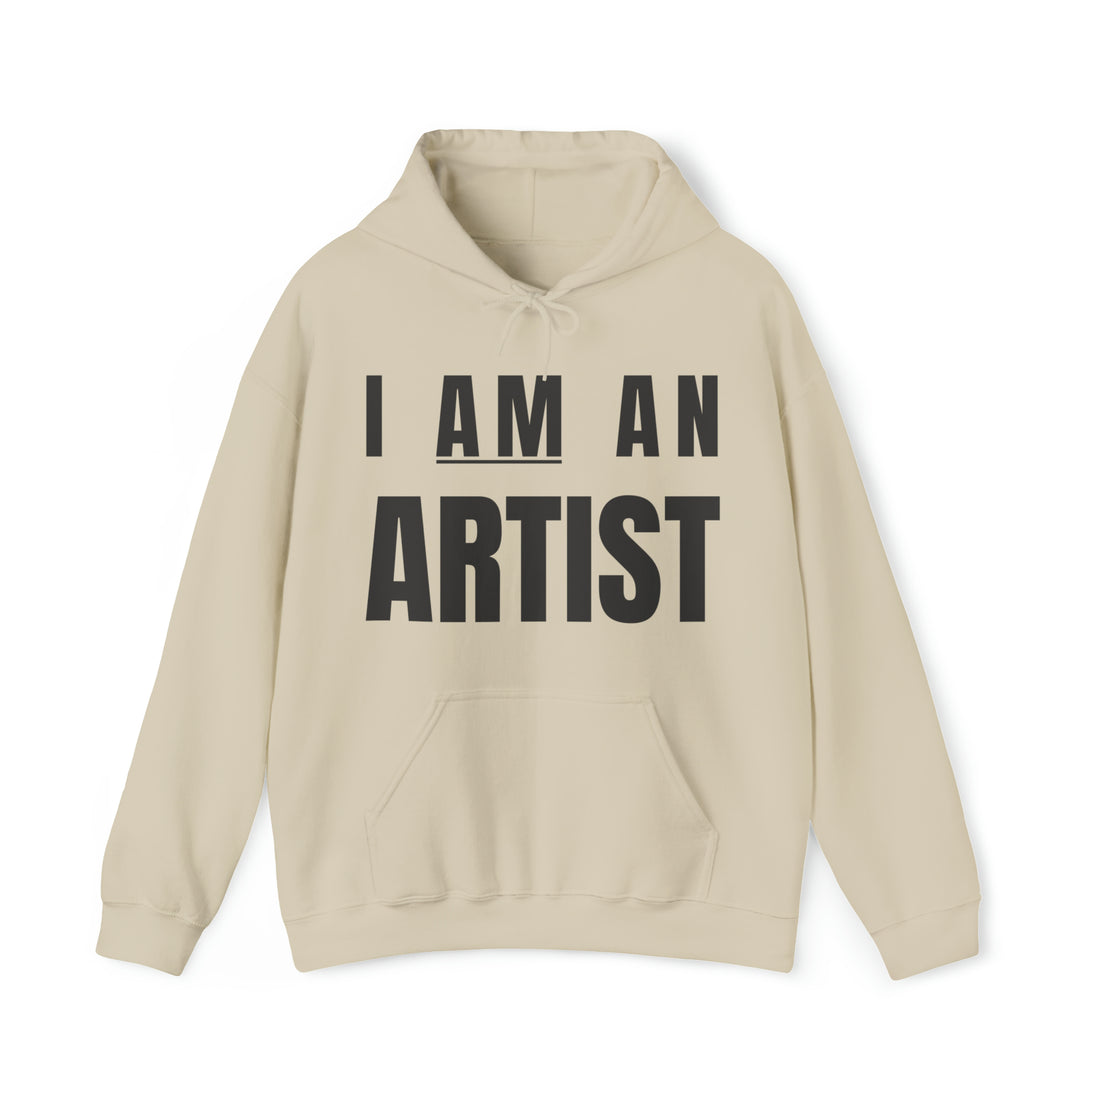 I AM AN ARTIST Hoodie, Unisex Heavy Hooded Sweatshirt